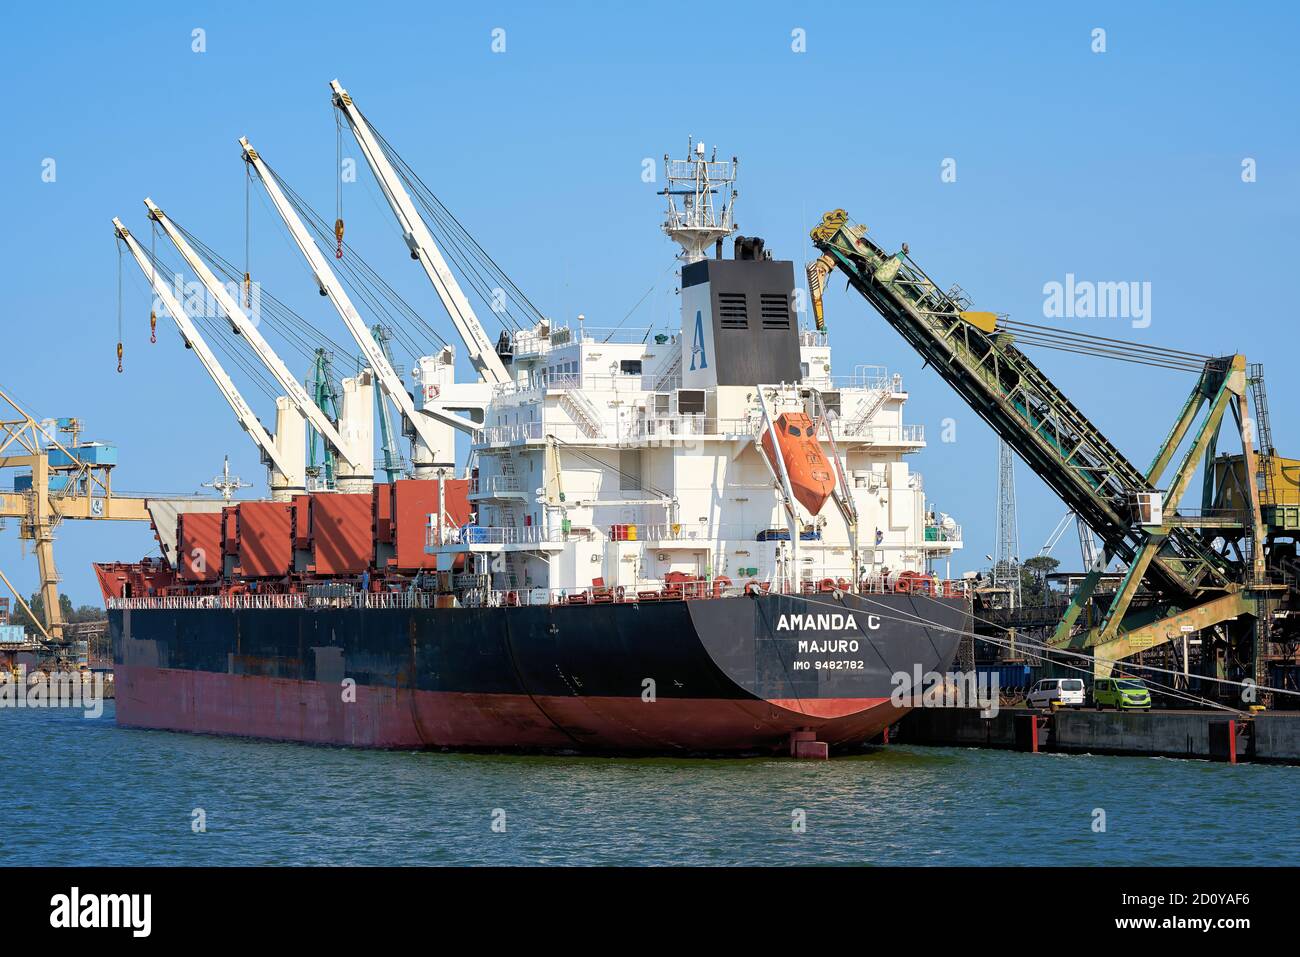 The bulk carrier Amanda C in the port of Swinoujscie on the Polish Baltic coast Stock Photo